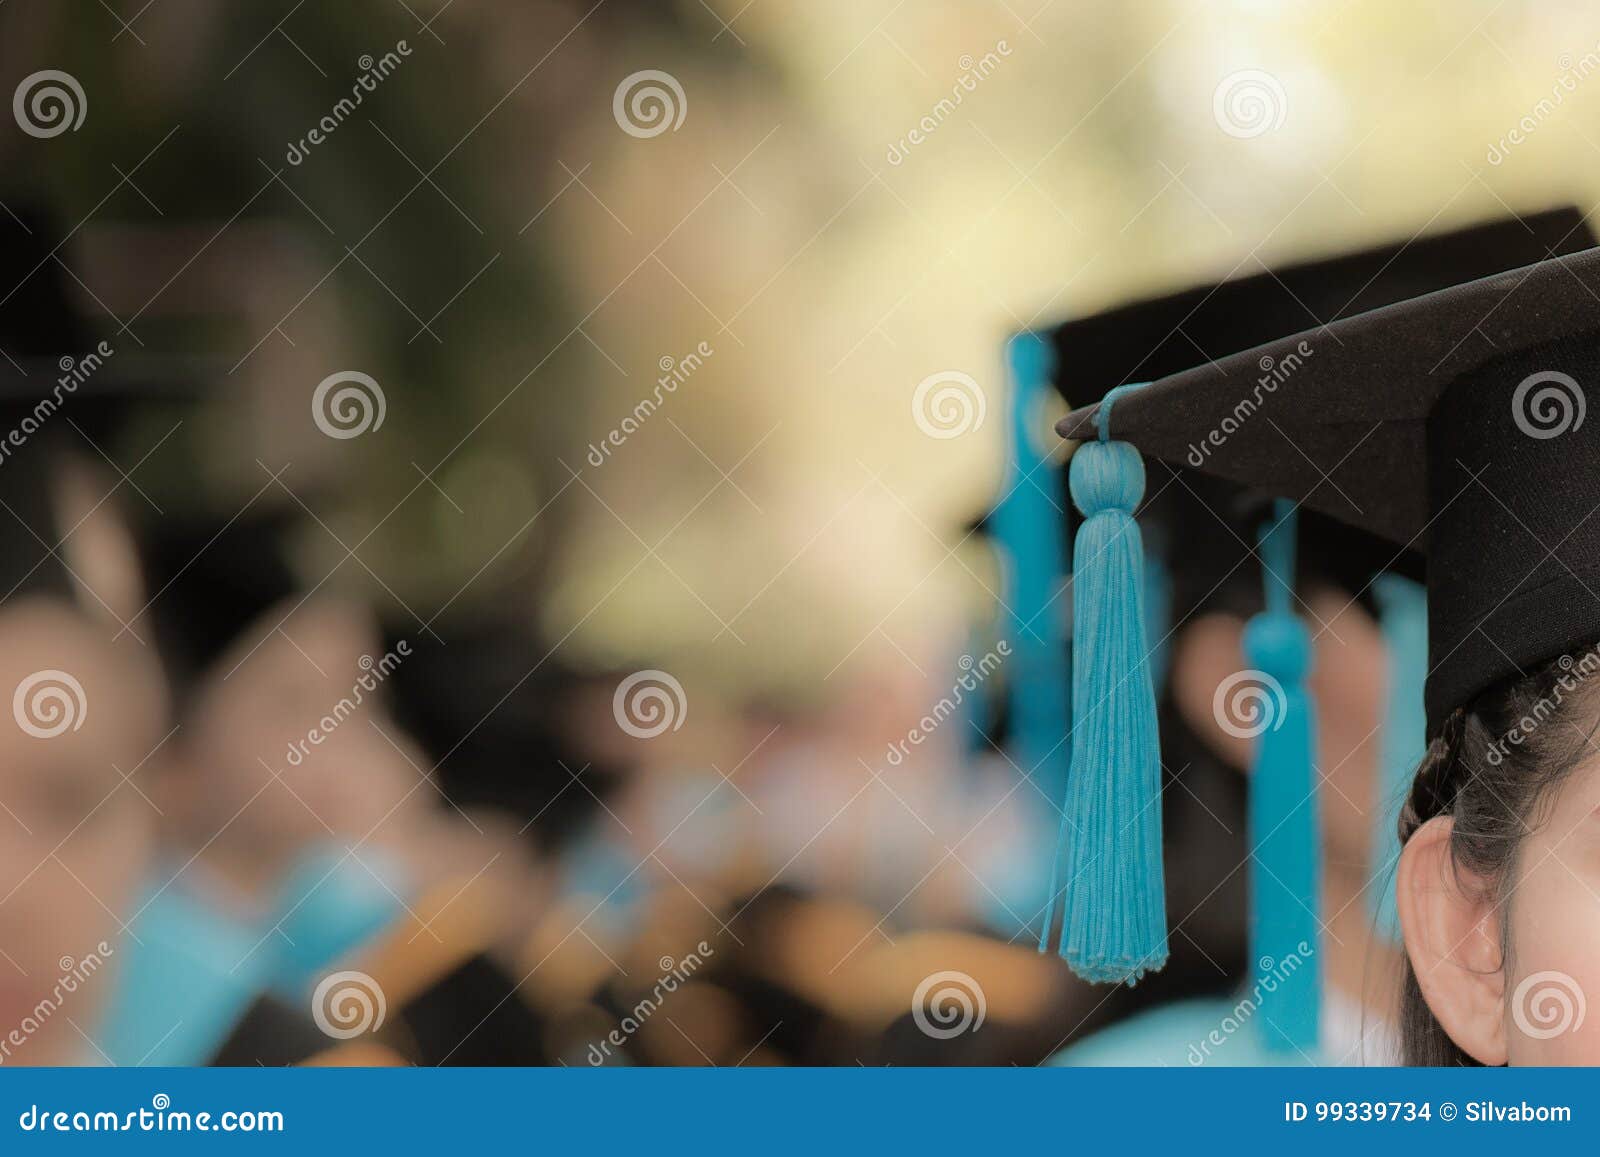 graduates in commencement graduation ceremony row, metaphor educ